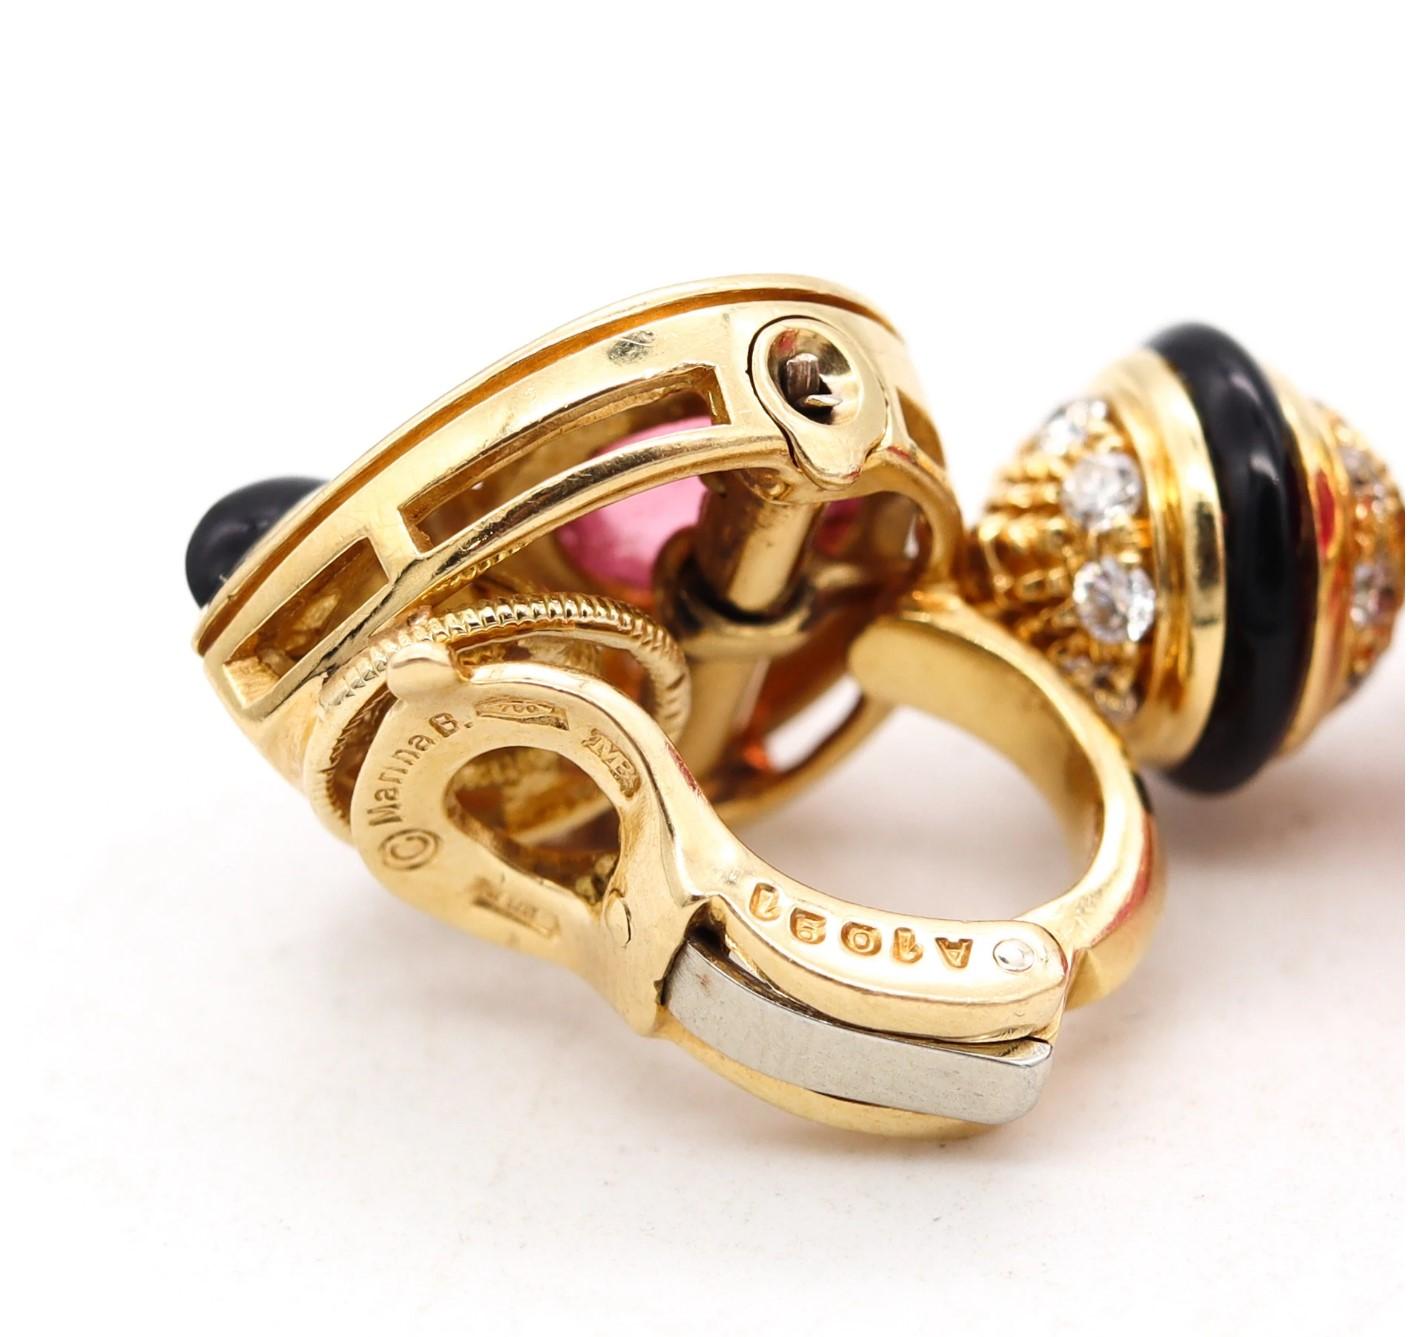 Brilliant Cut Marina B Milano Pneus Earrings in 18Kt Gold with 82.11 Cts Diamonds & Tourmaline